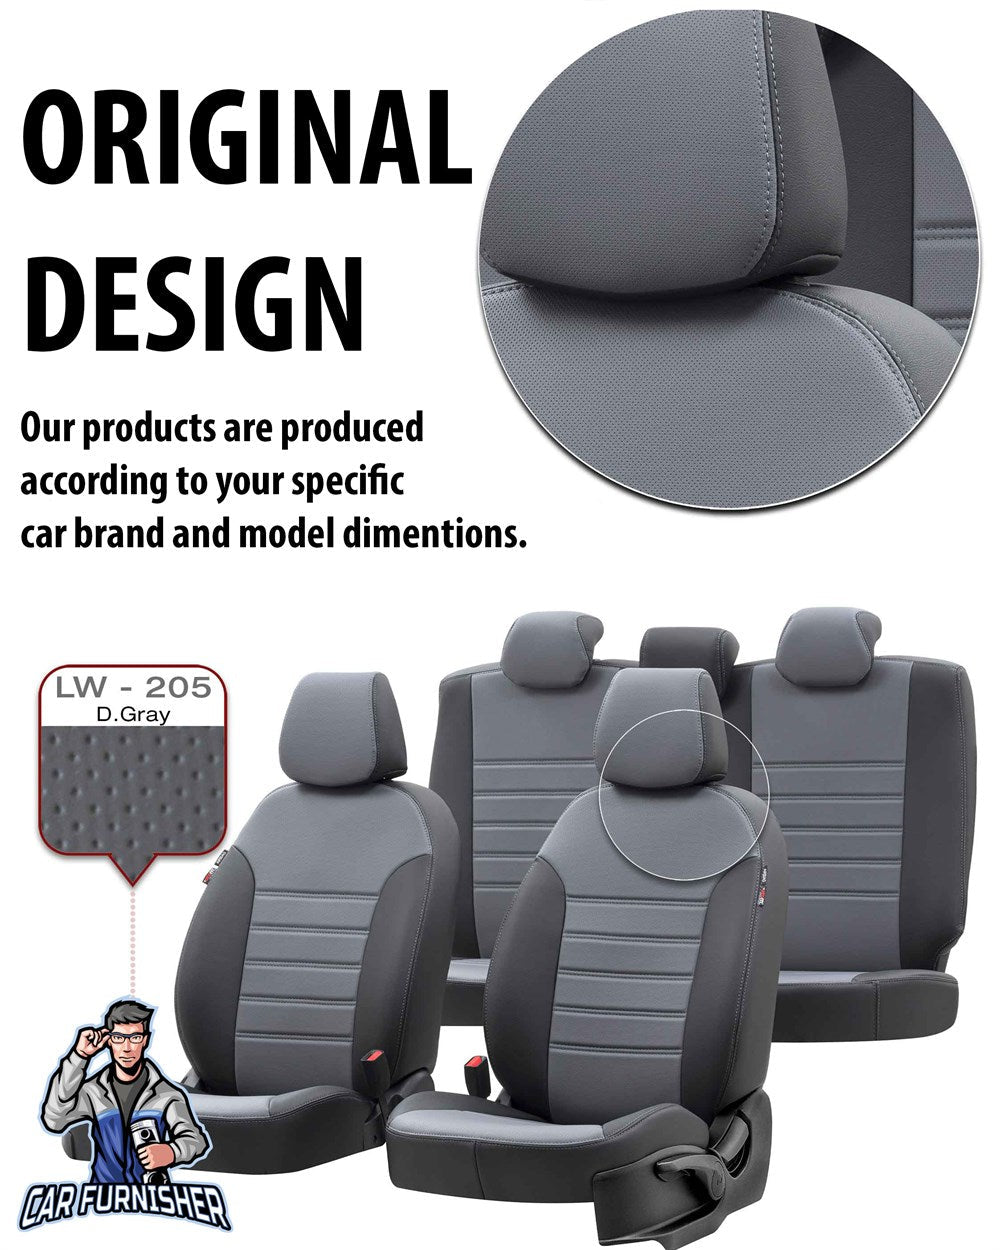 Renault Kadjar Seat Covers Istanbul Leather Design Ivory Leather